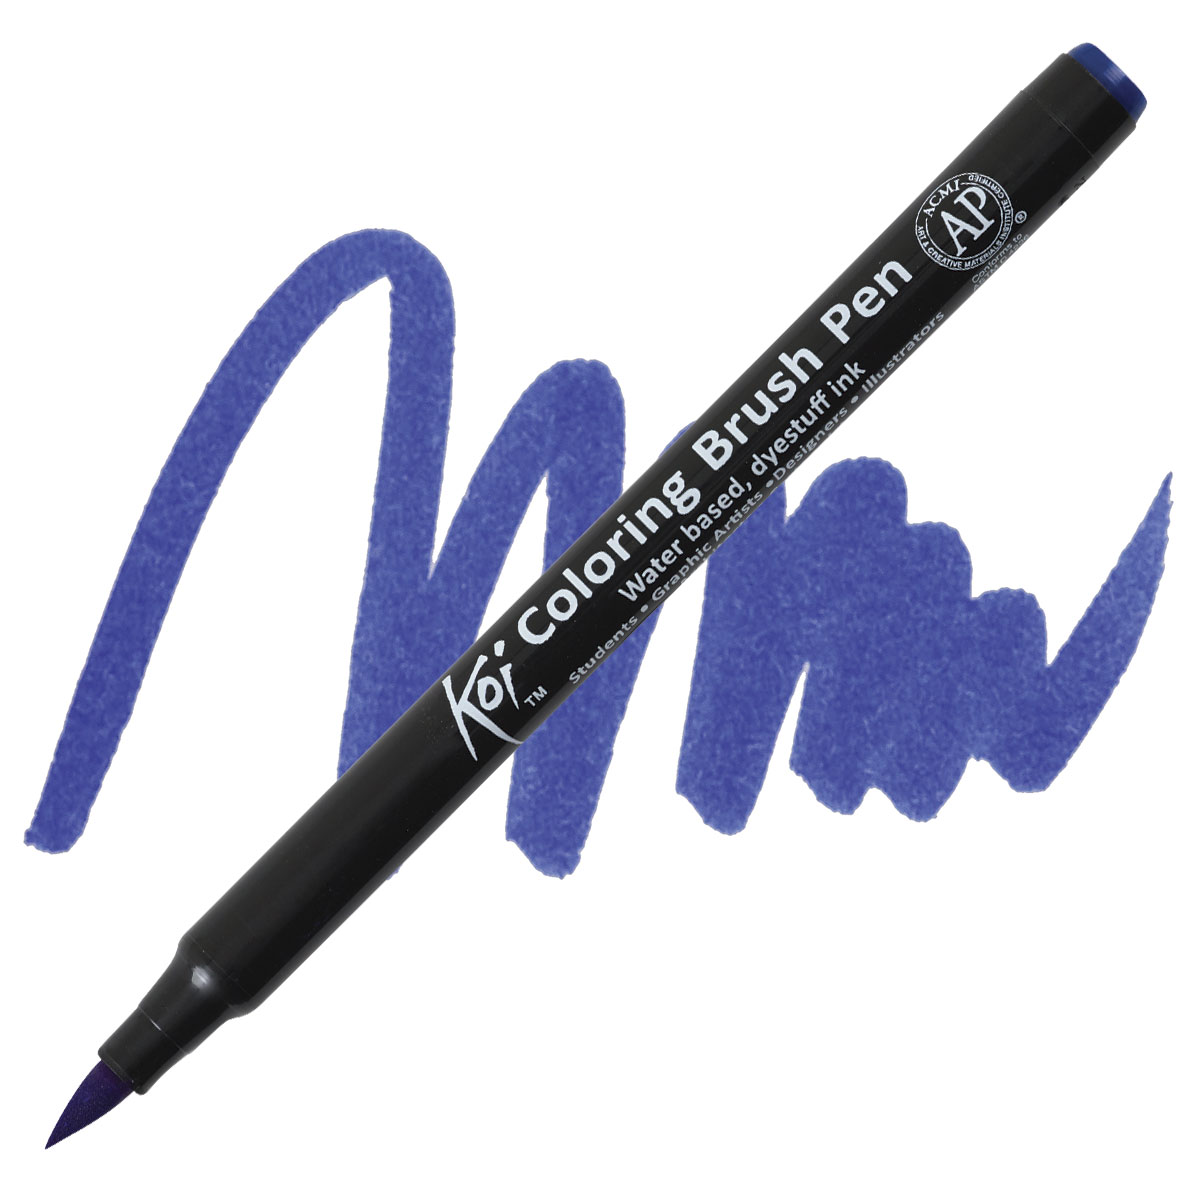 Sakura Koi Brush Pens and | BLICK Materials